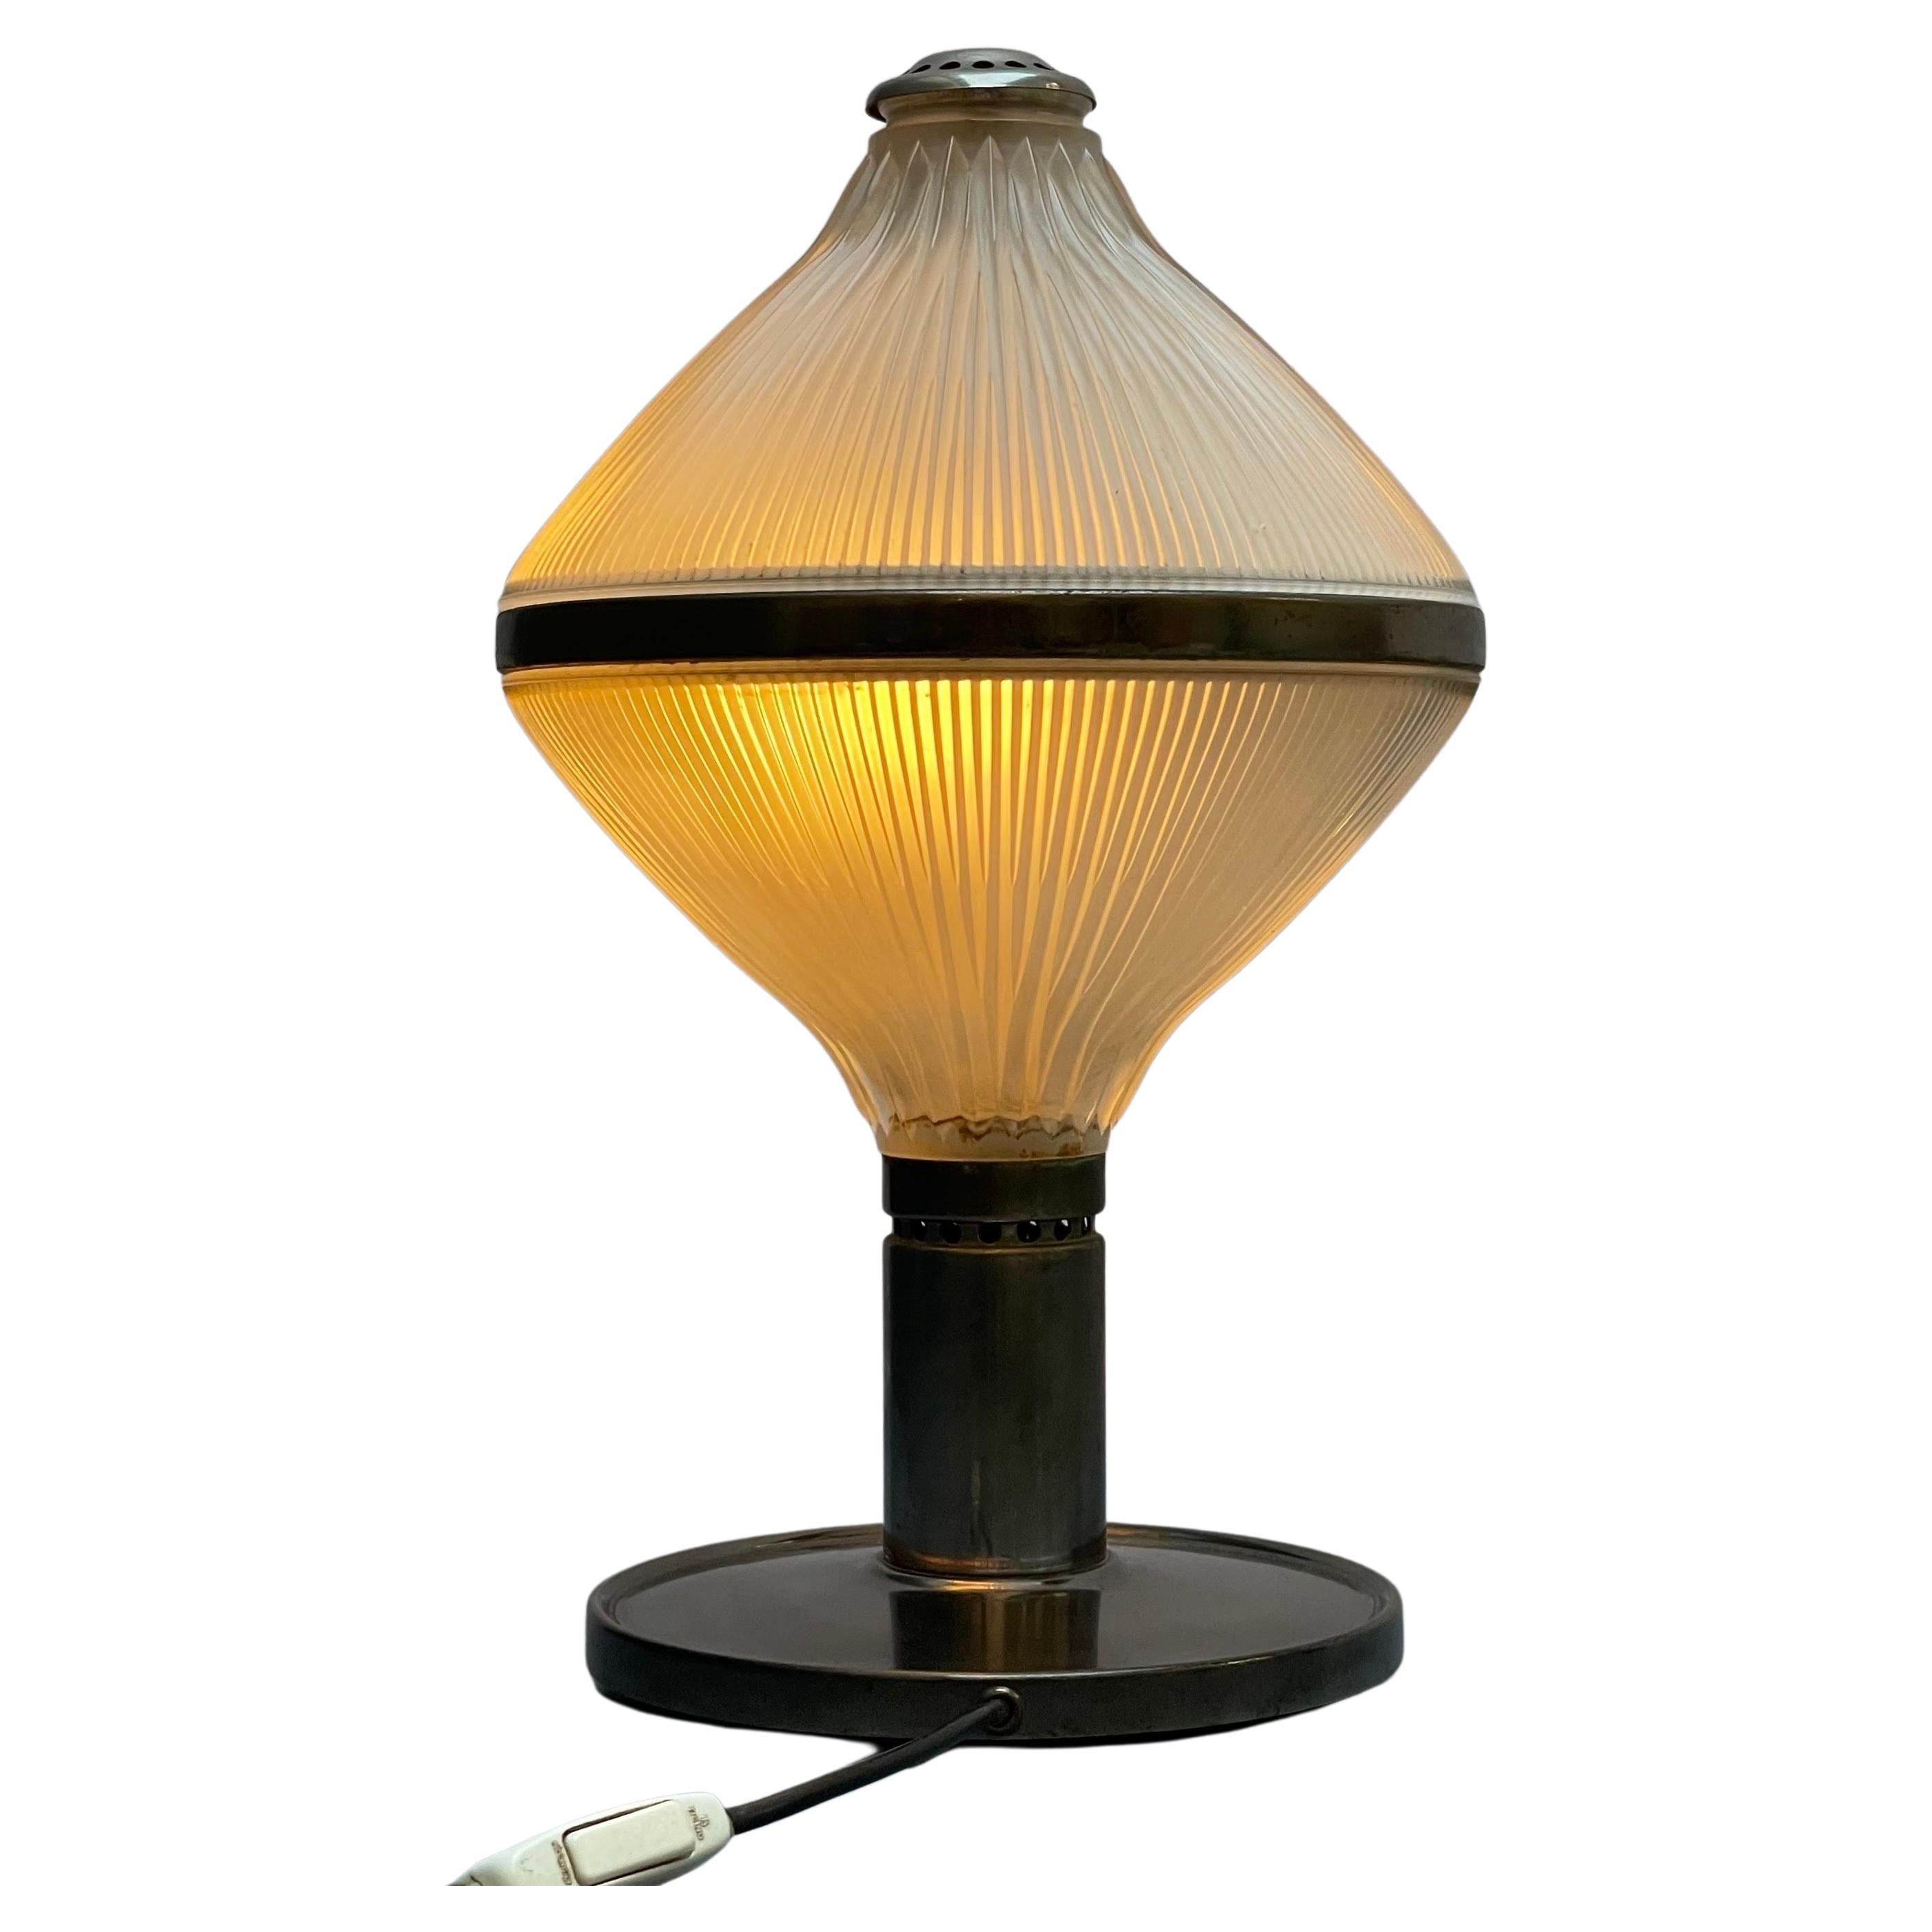 Polinnia Lamp by Studio BBPR